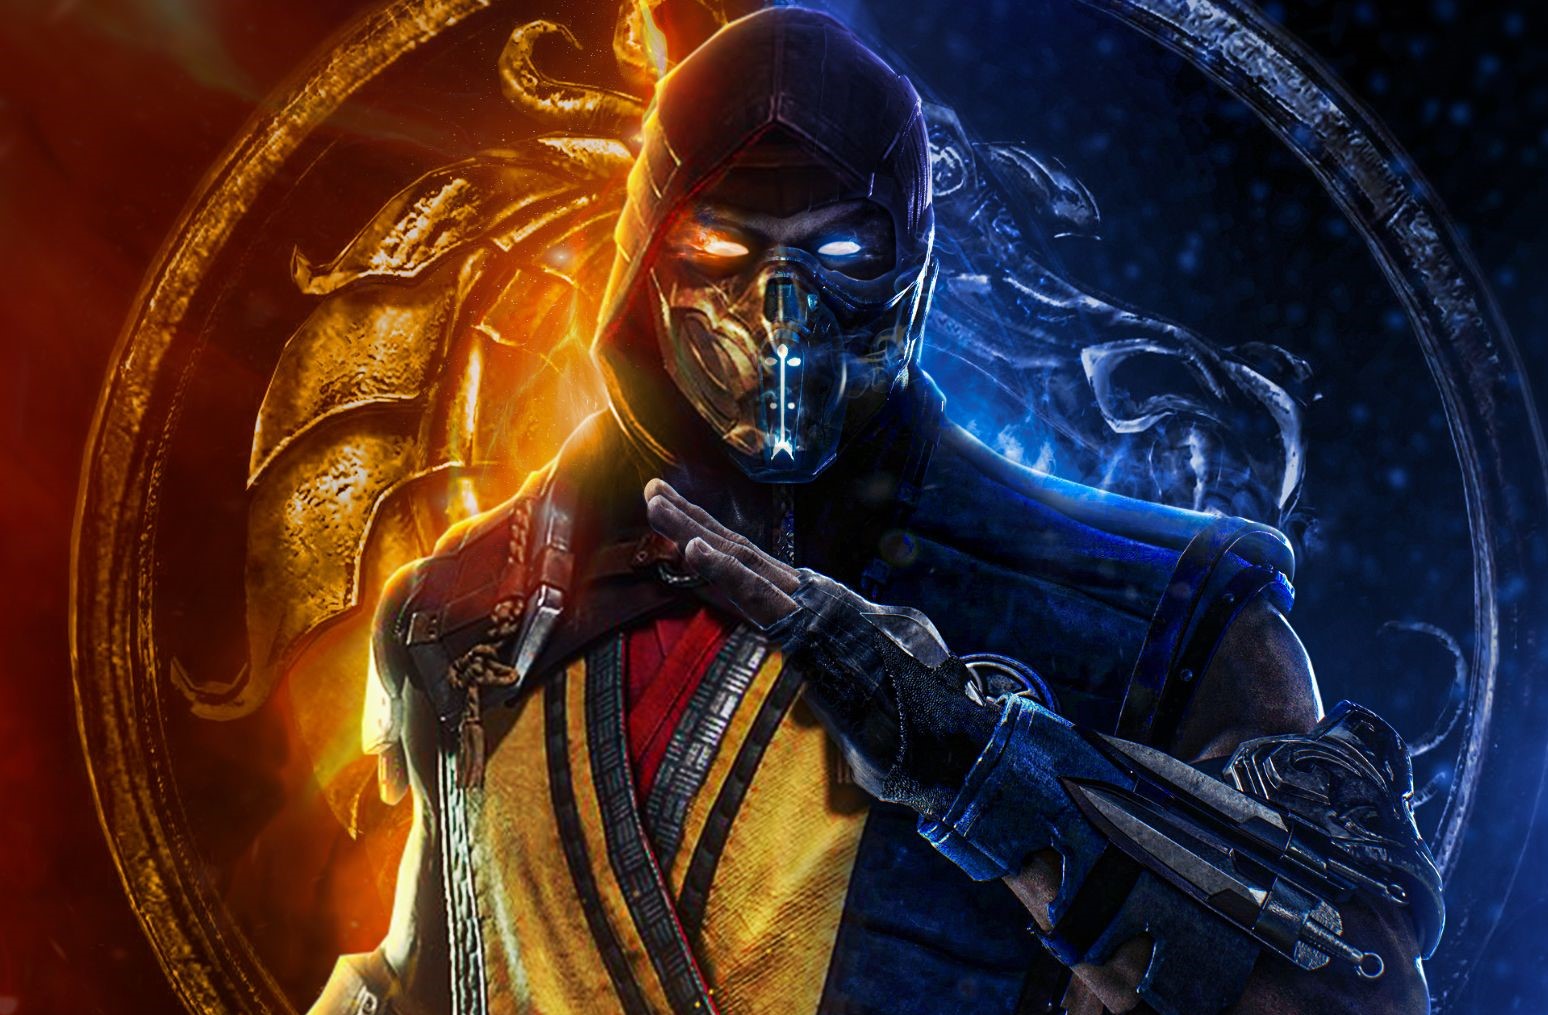 Arquivo Mortal Kombat - Poster do Raiden no filme de Mortal Kombat.